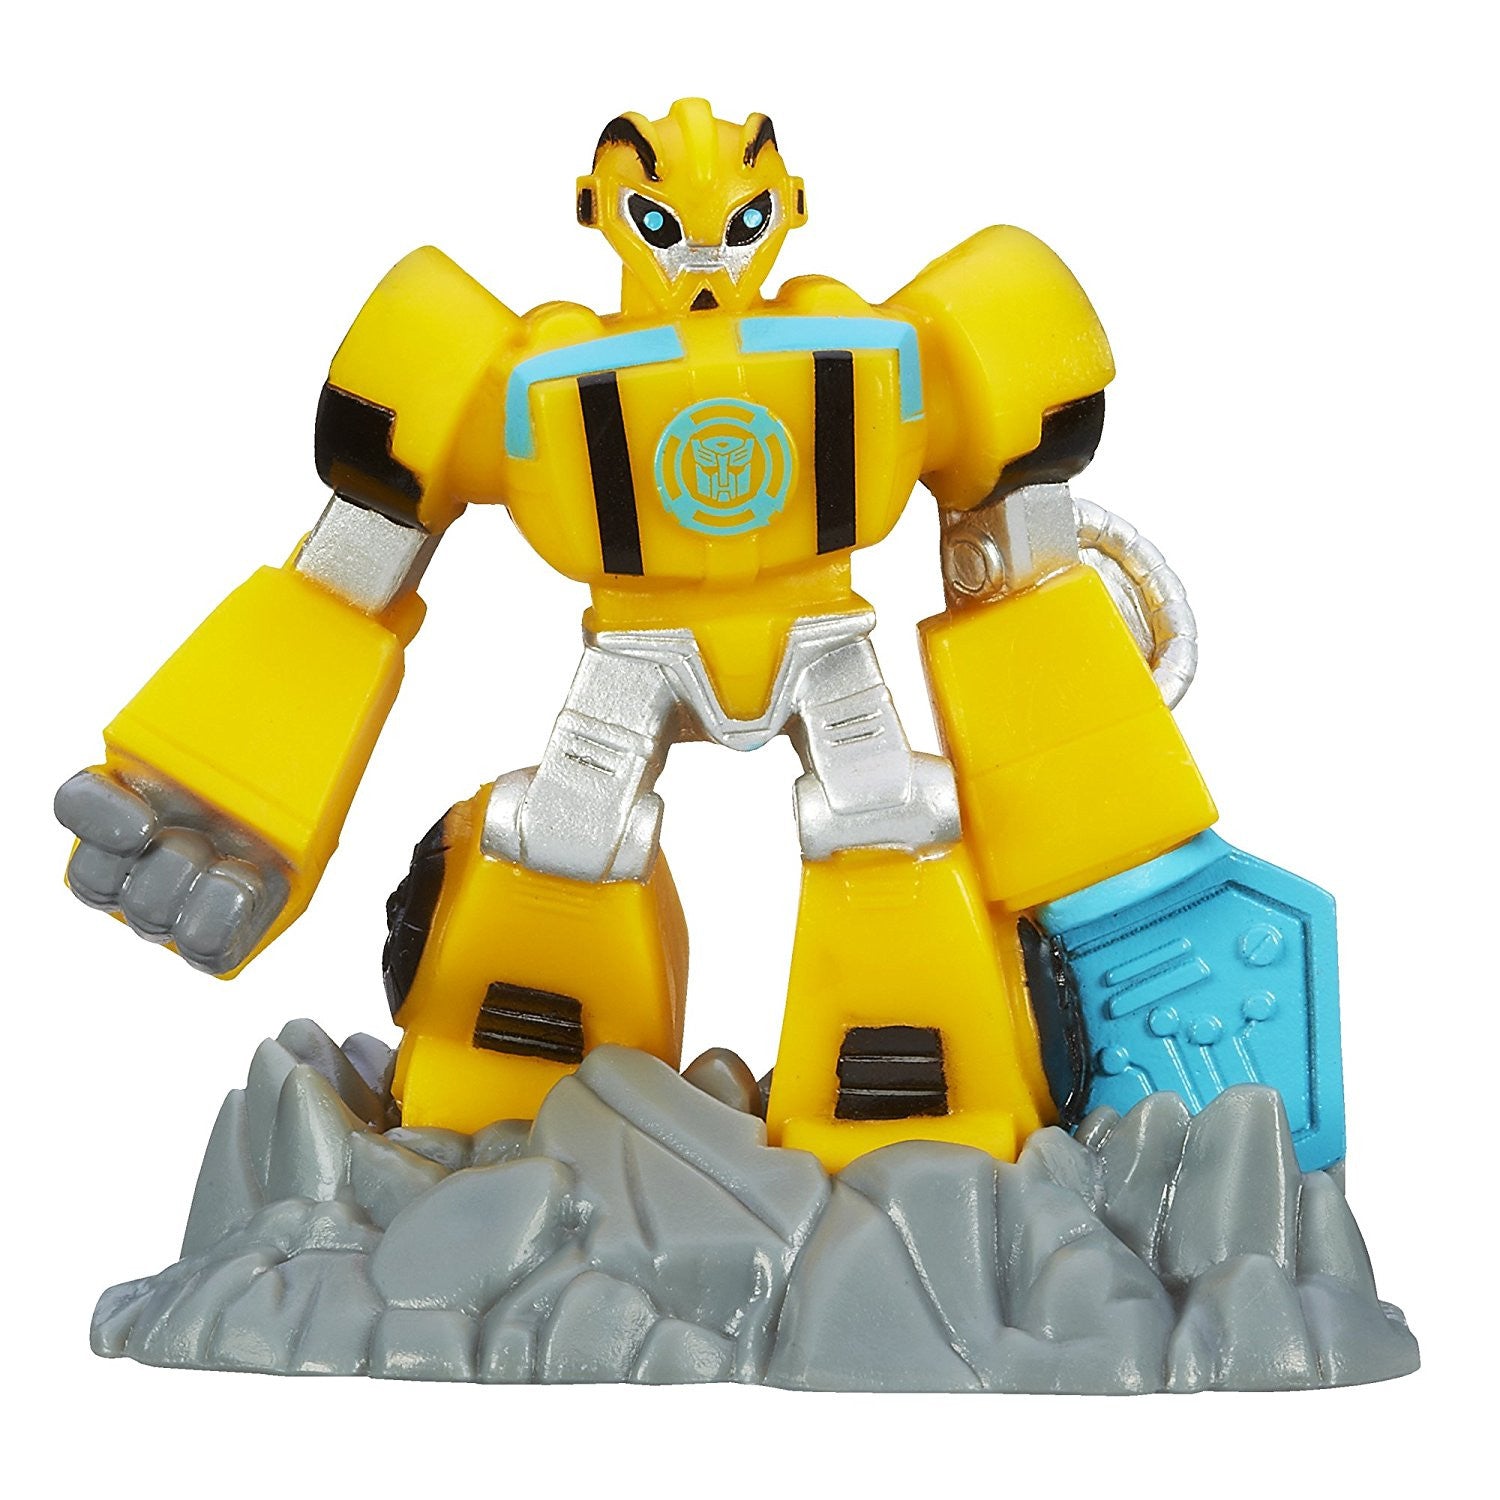 Transformers Playskool Heroes Rescue Bots Beam Box Bumblebee Game Pack